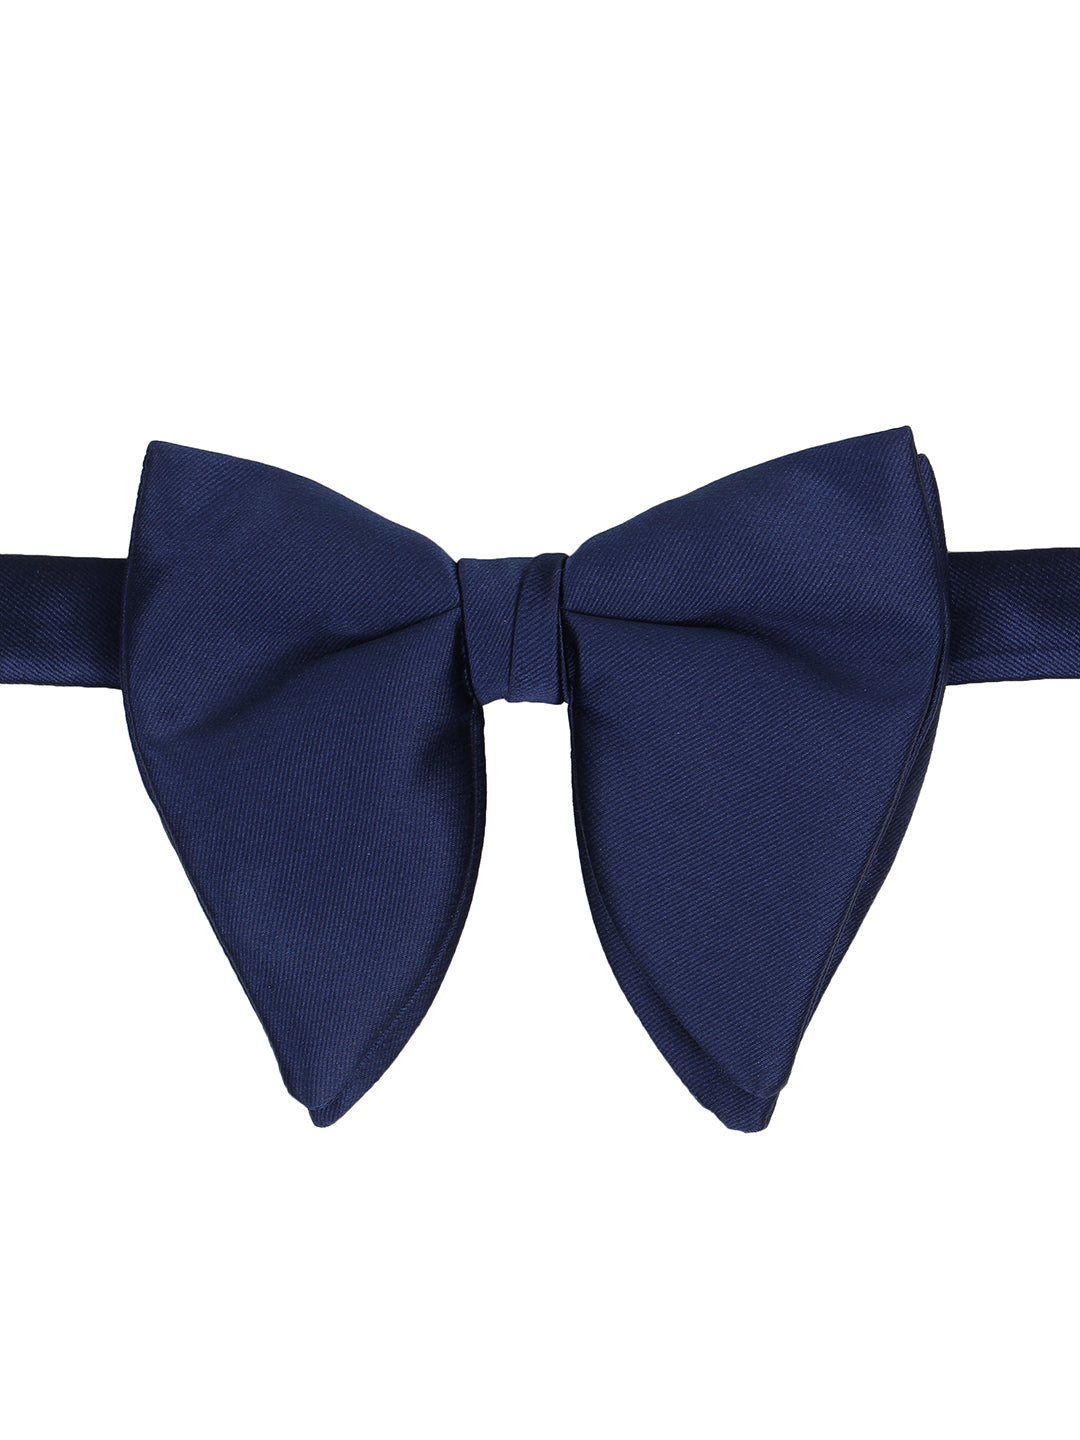 Alvaro Castagnino Men's Navy Blue Colored Floppy Solid Bow Tie